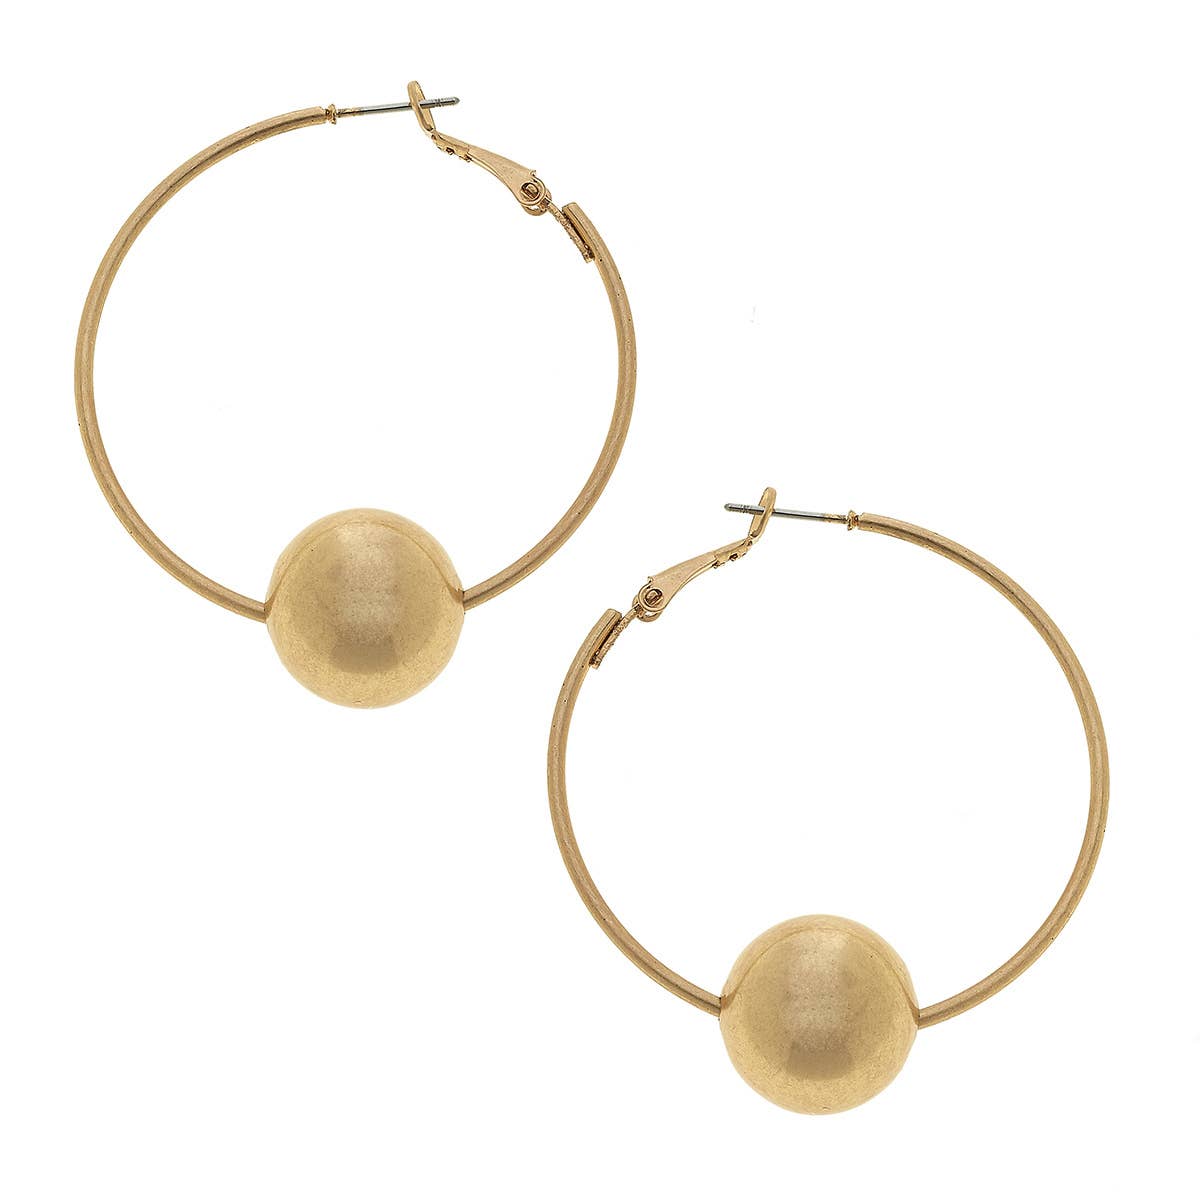 Lizzie Threaded Ball Bead Hoop Earrings in Worn Gold